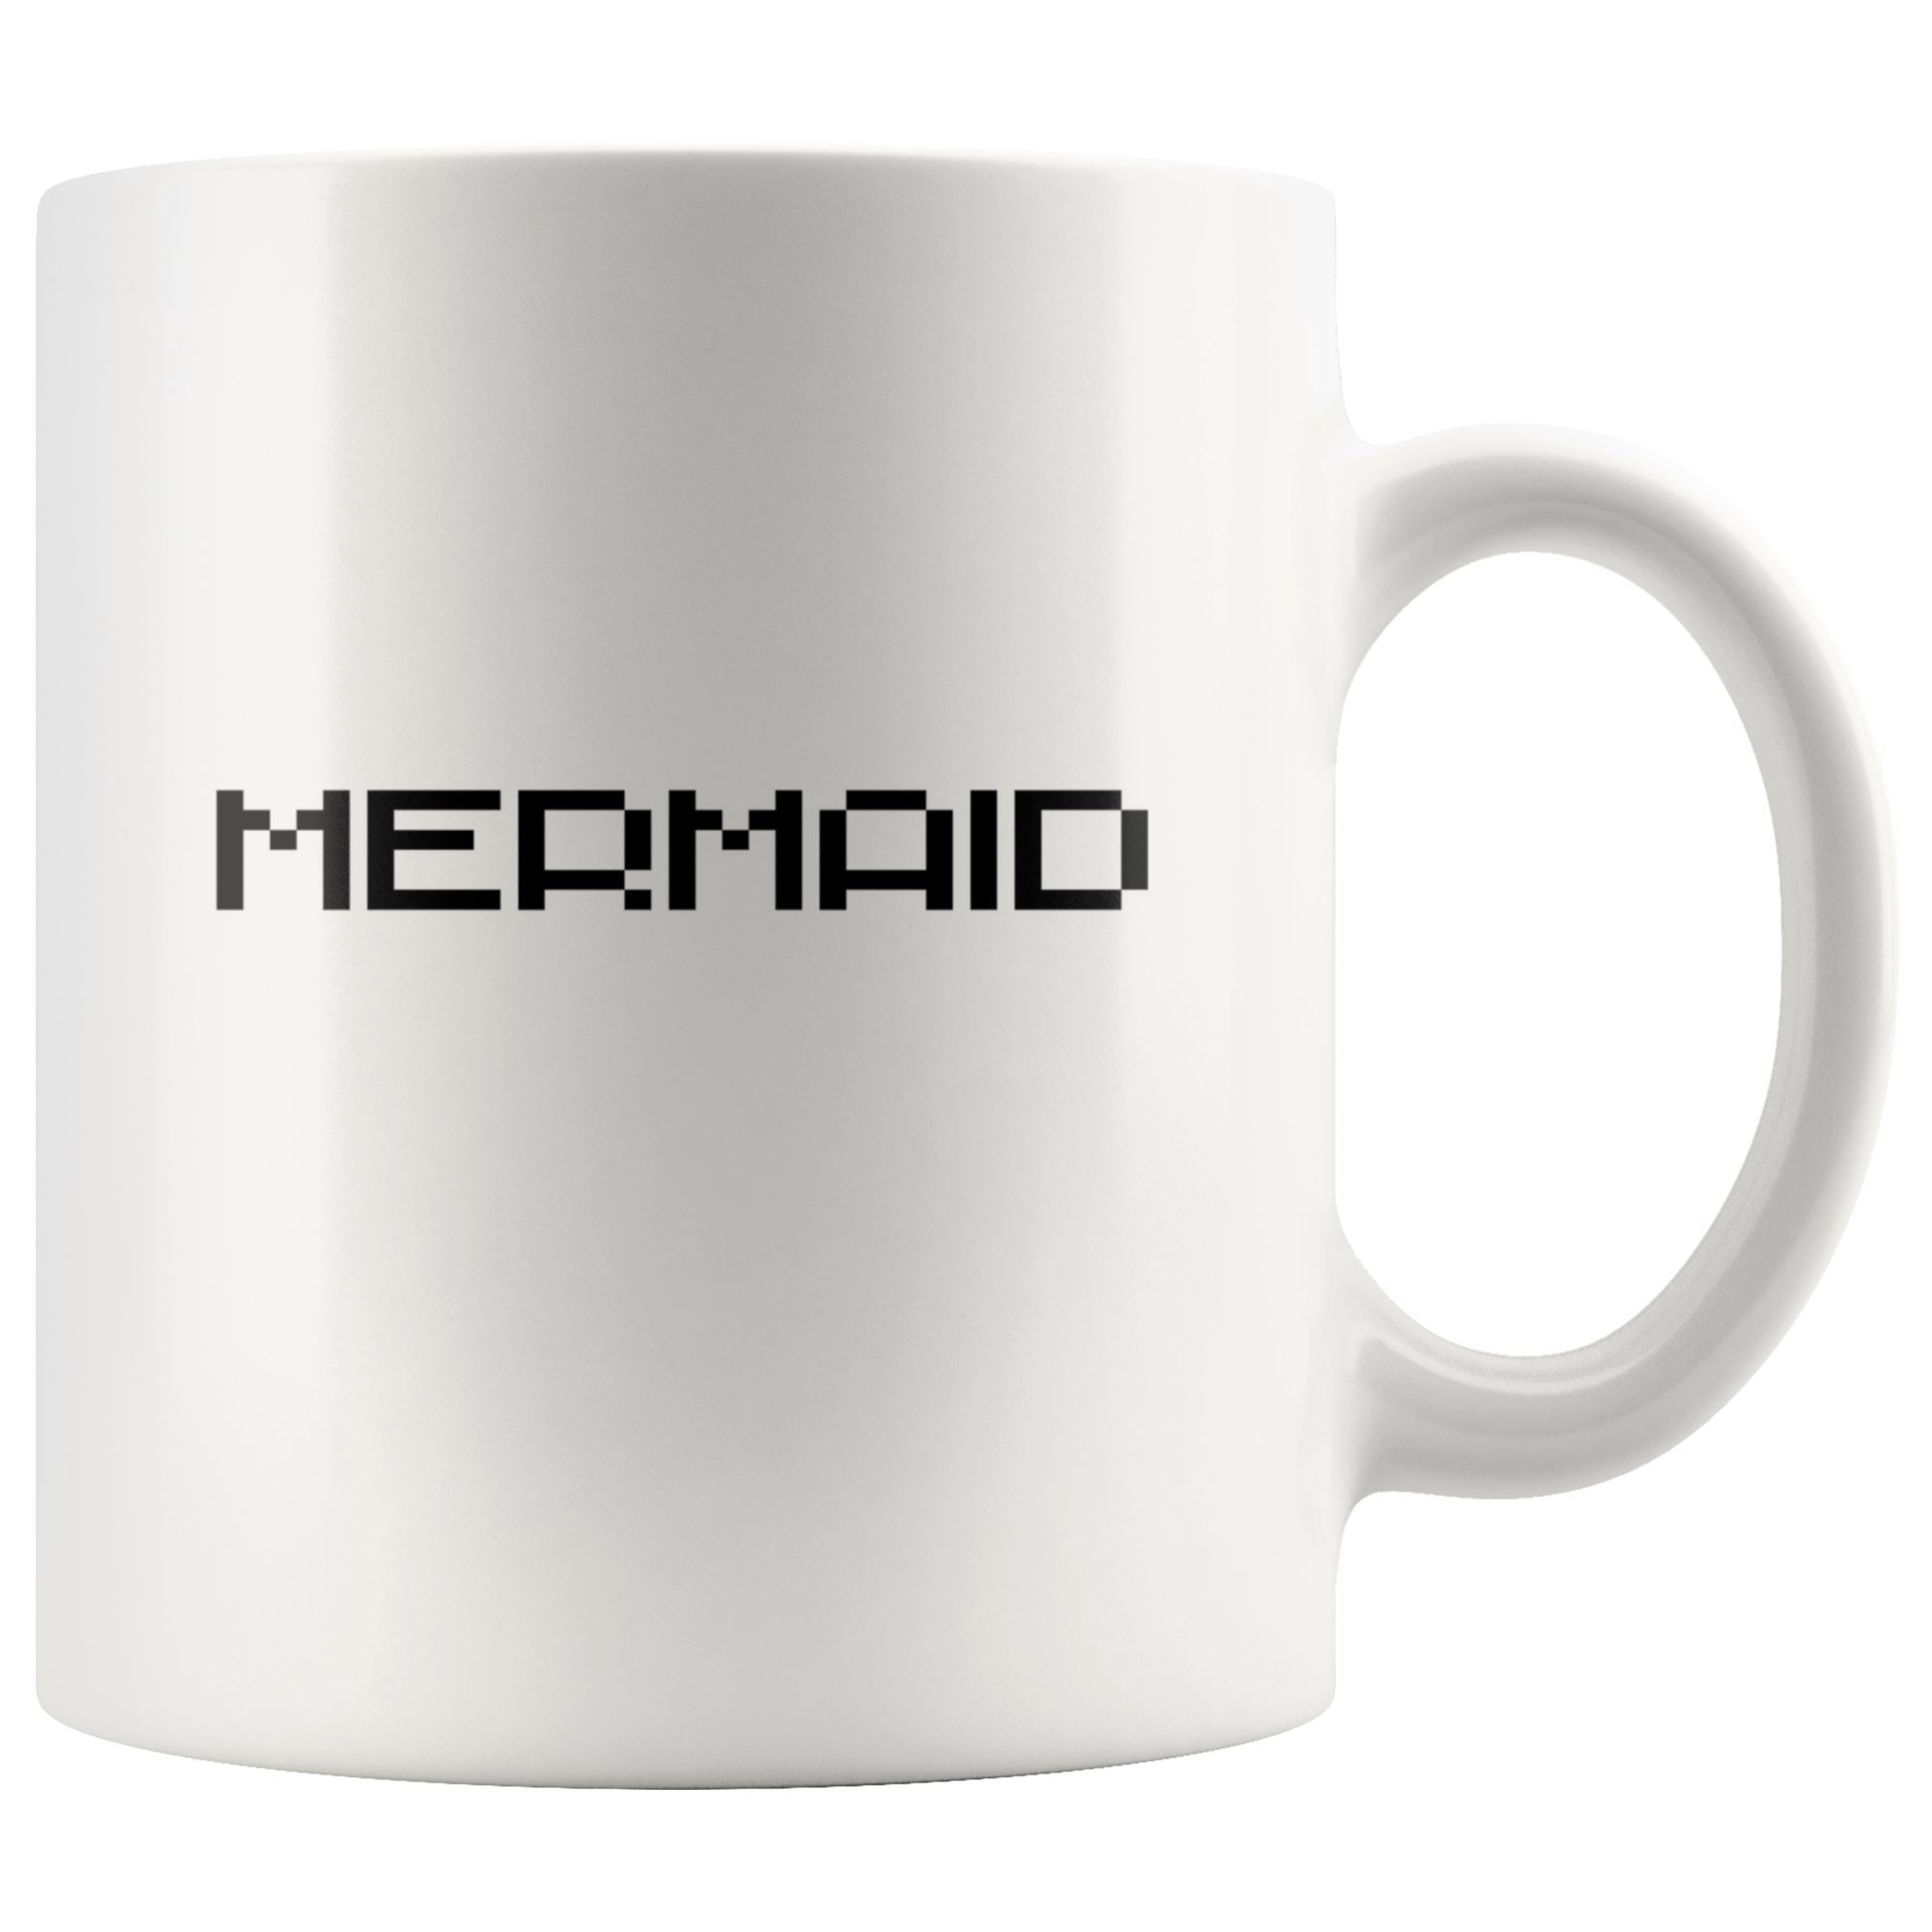 Mermaid Mug Drinkware teelaunch 11oz Mug 